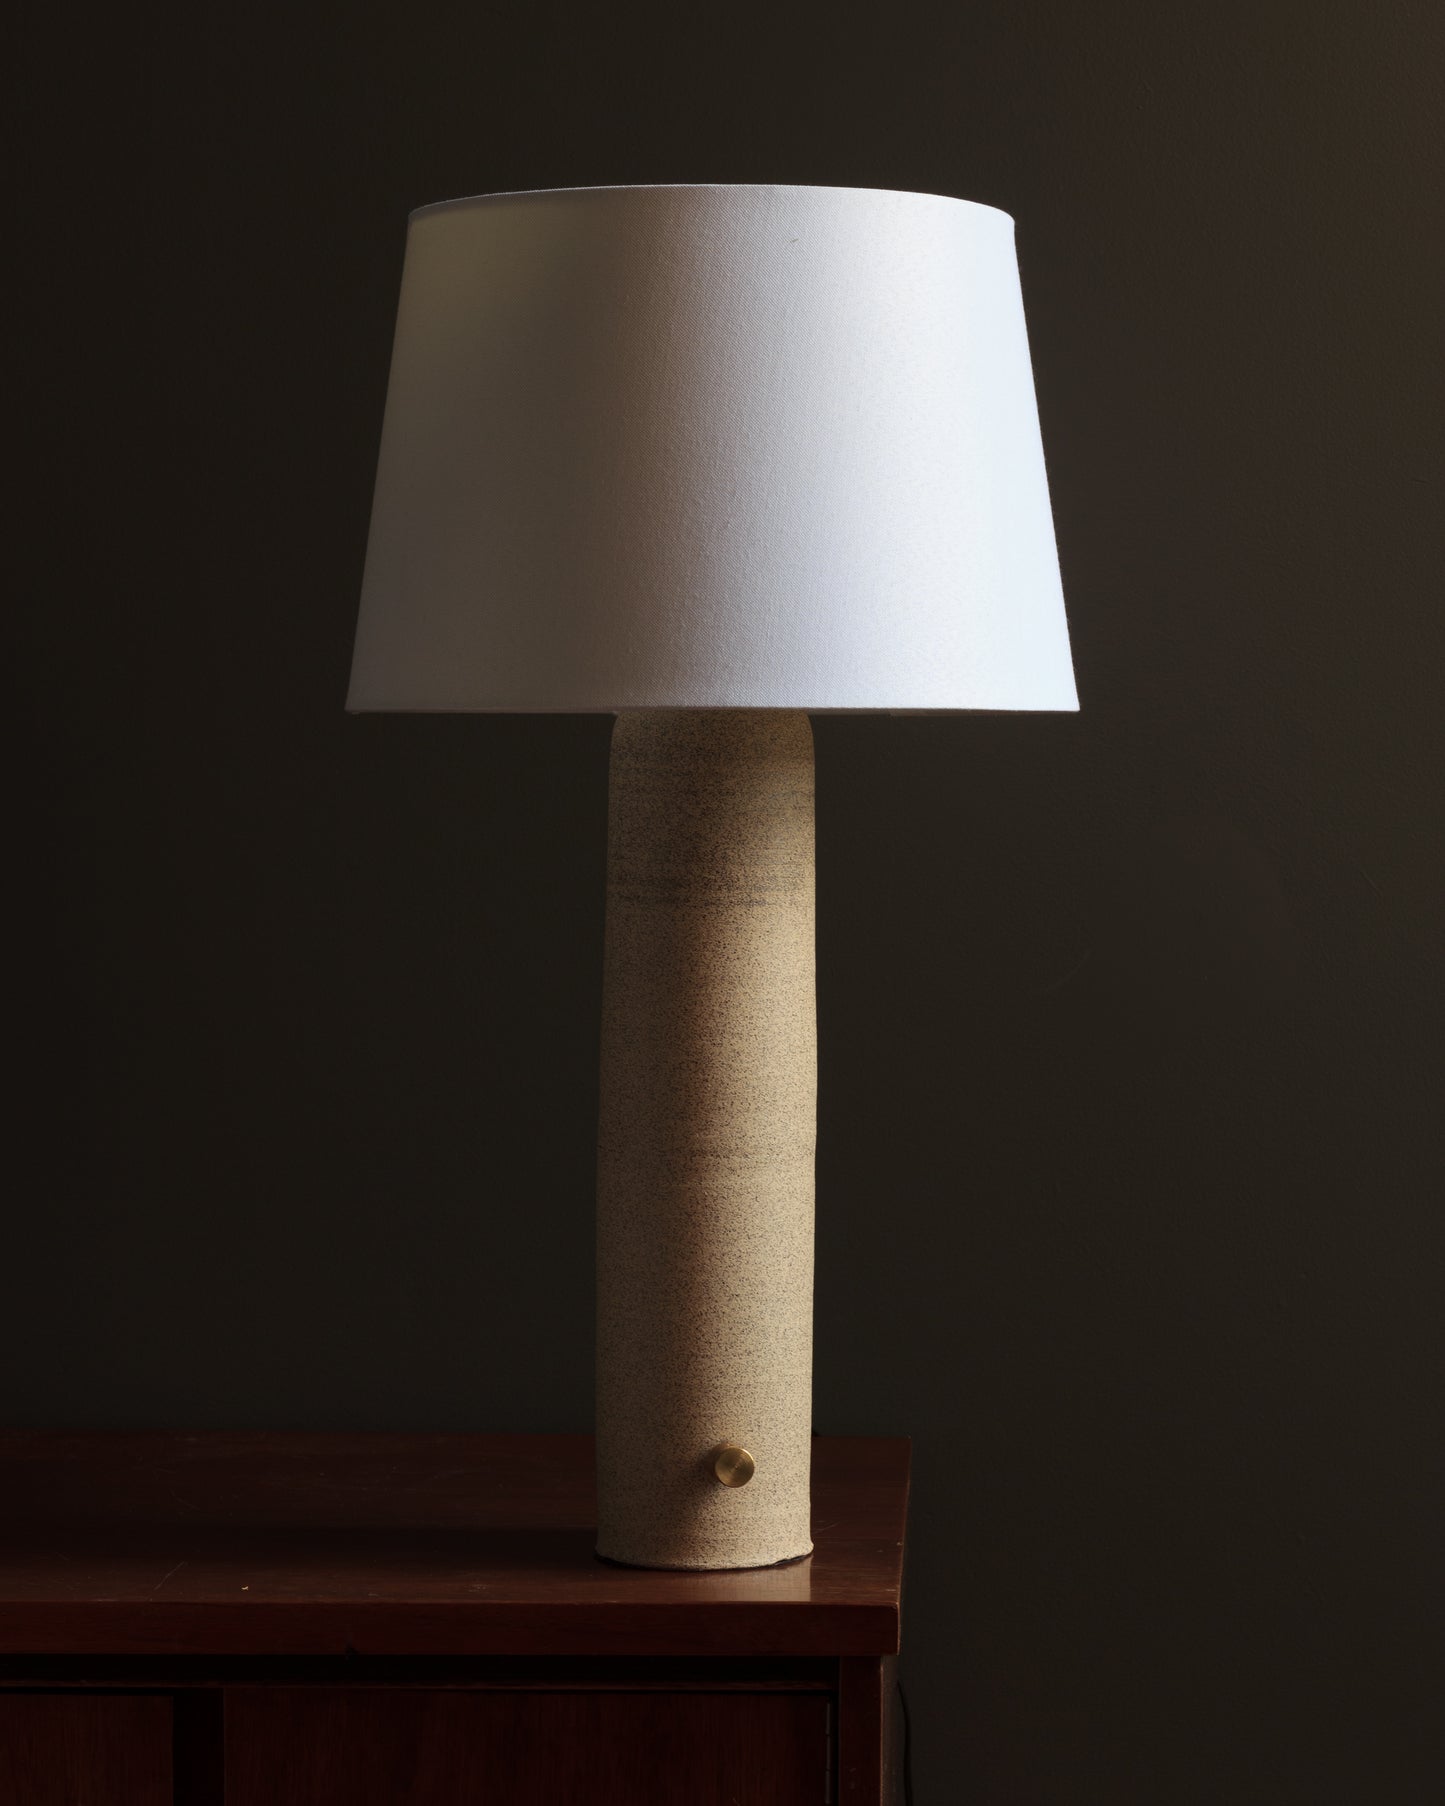 Tall Lamp